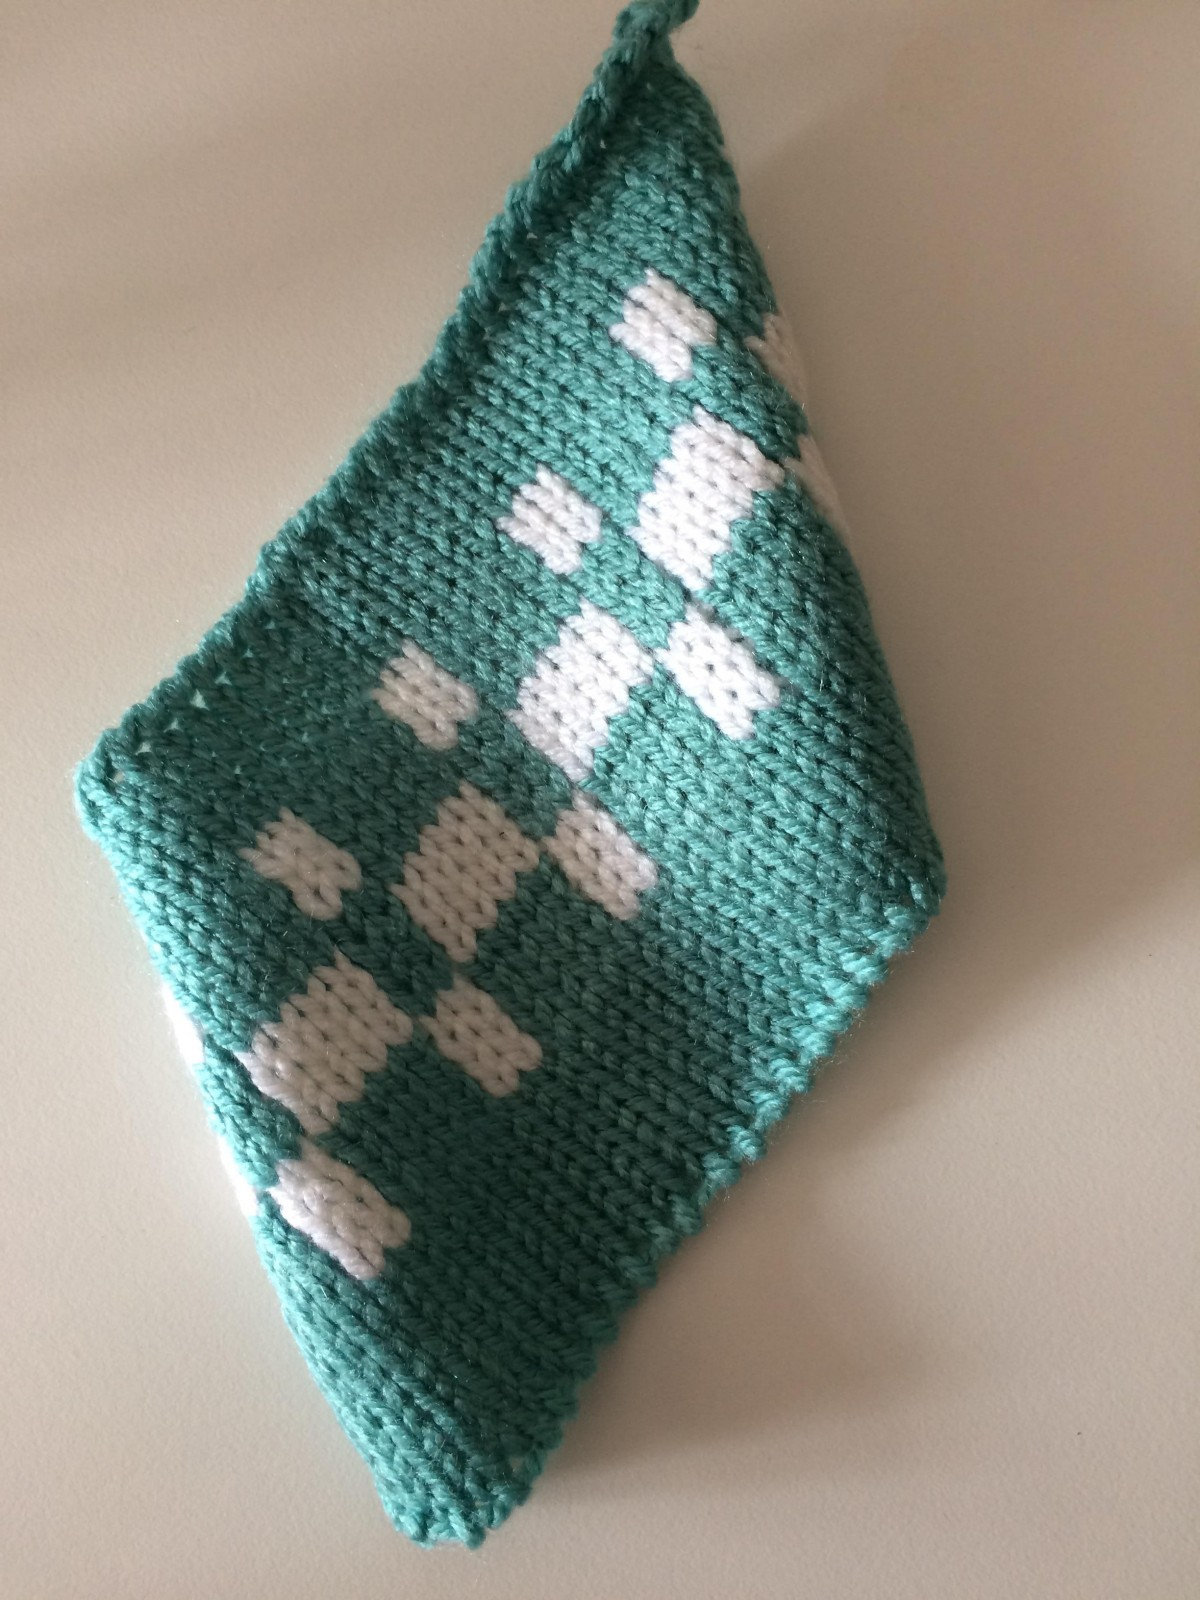 Intarsia Knit Patterns Knitting Machine Tips And Tricks Hobcraft Blog